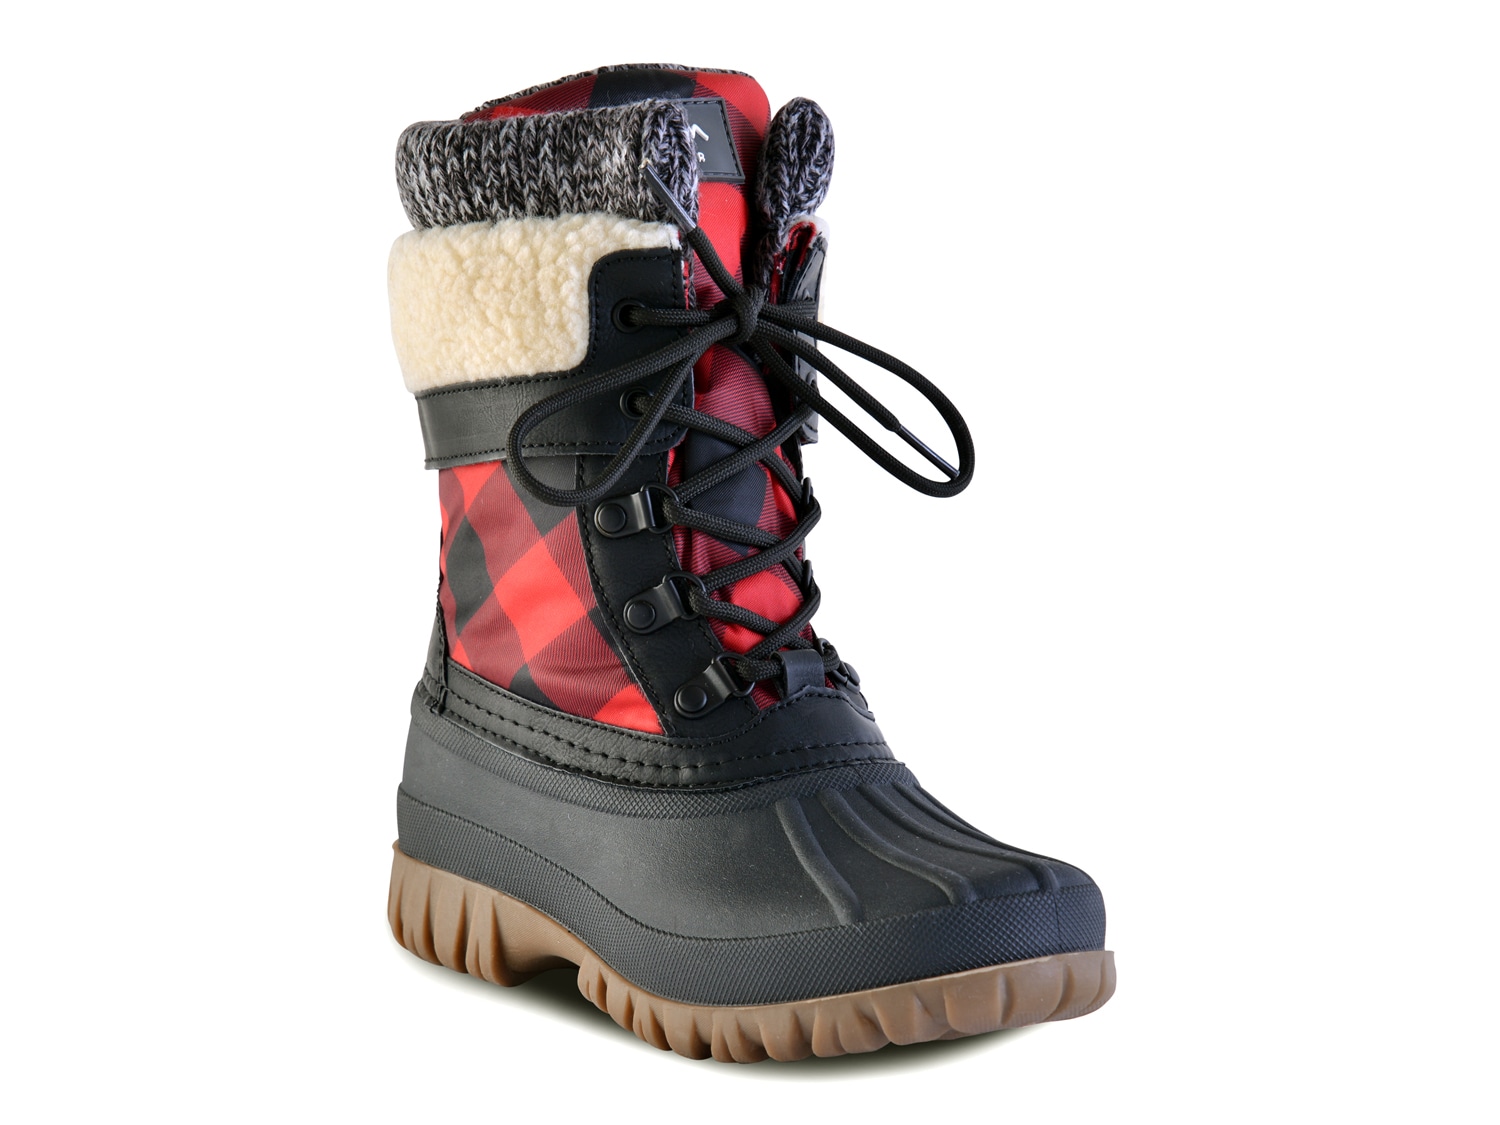 cougar creek winter boots